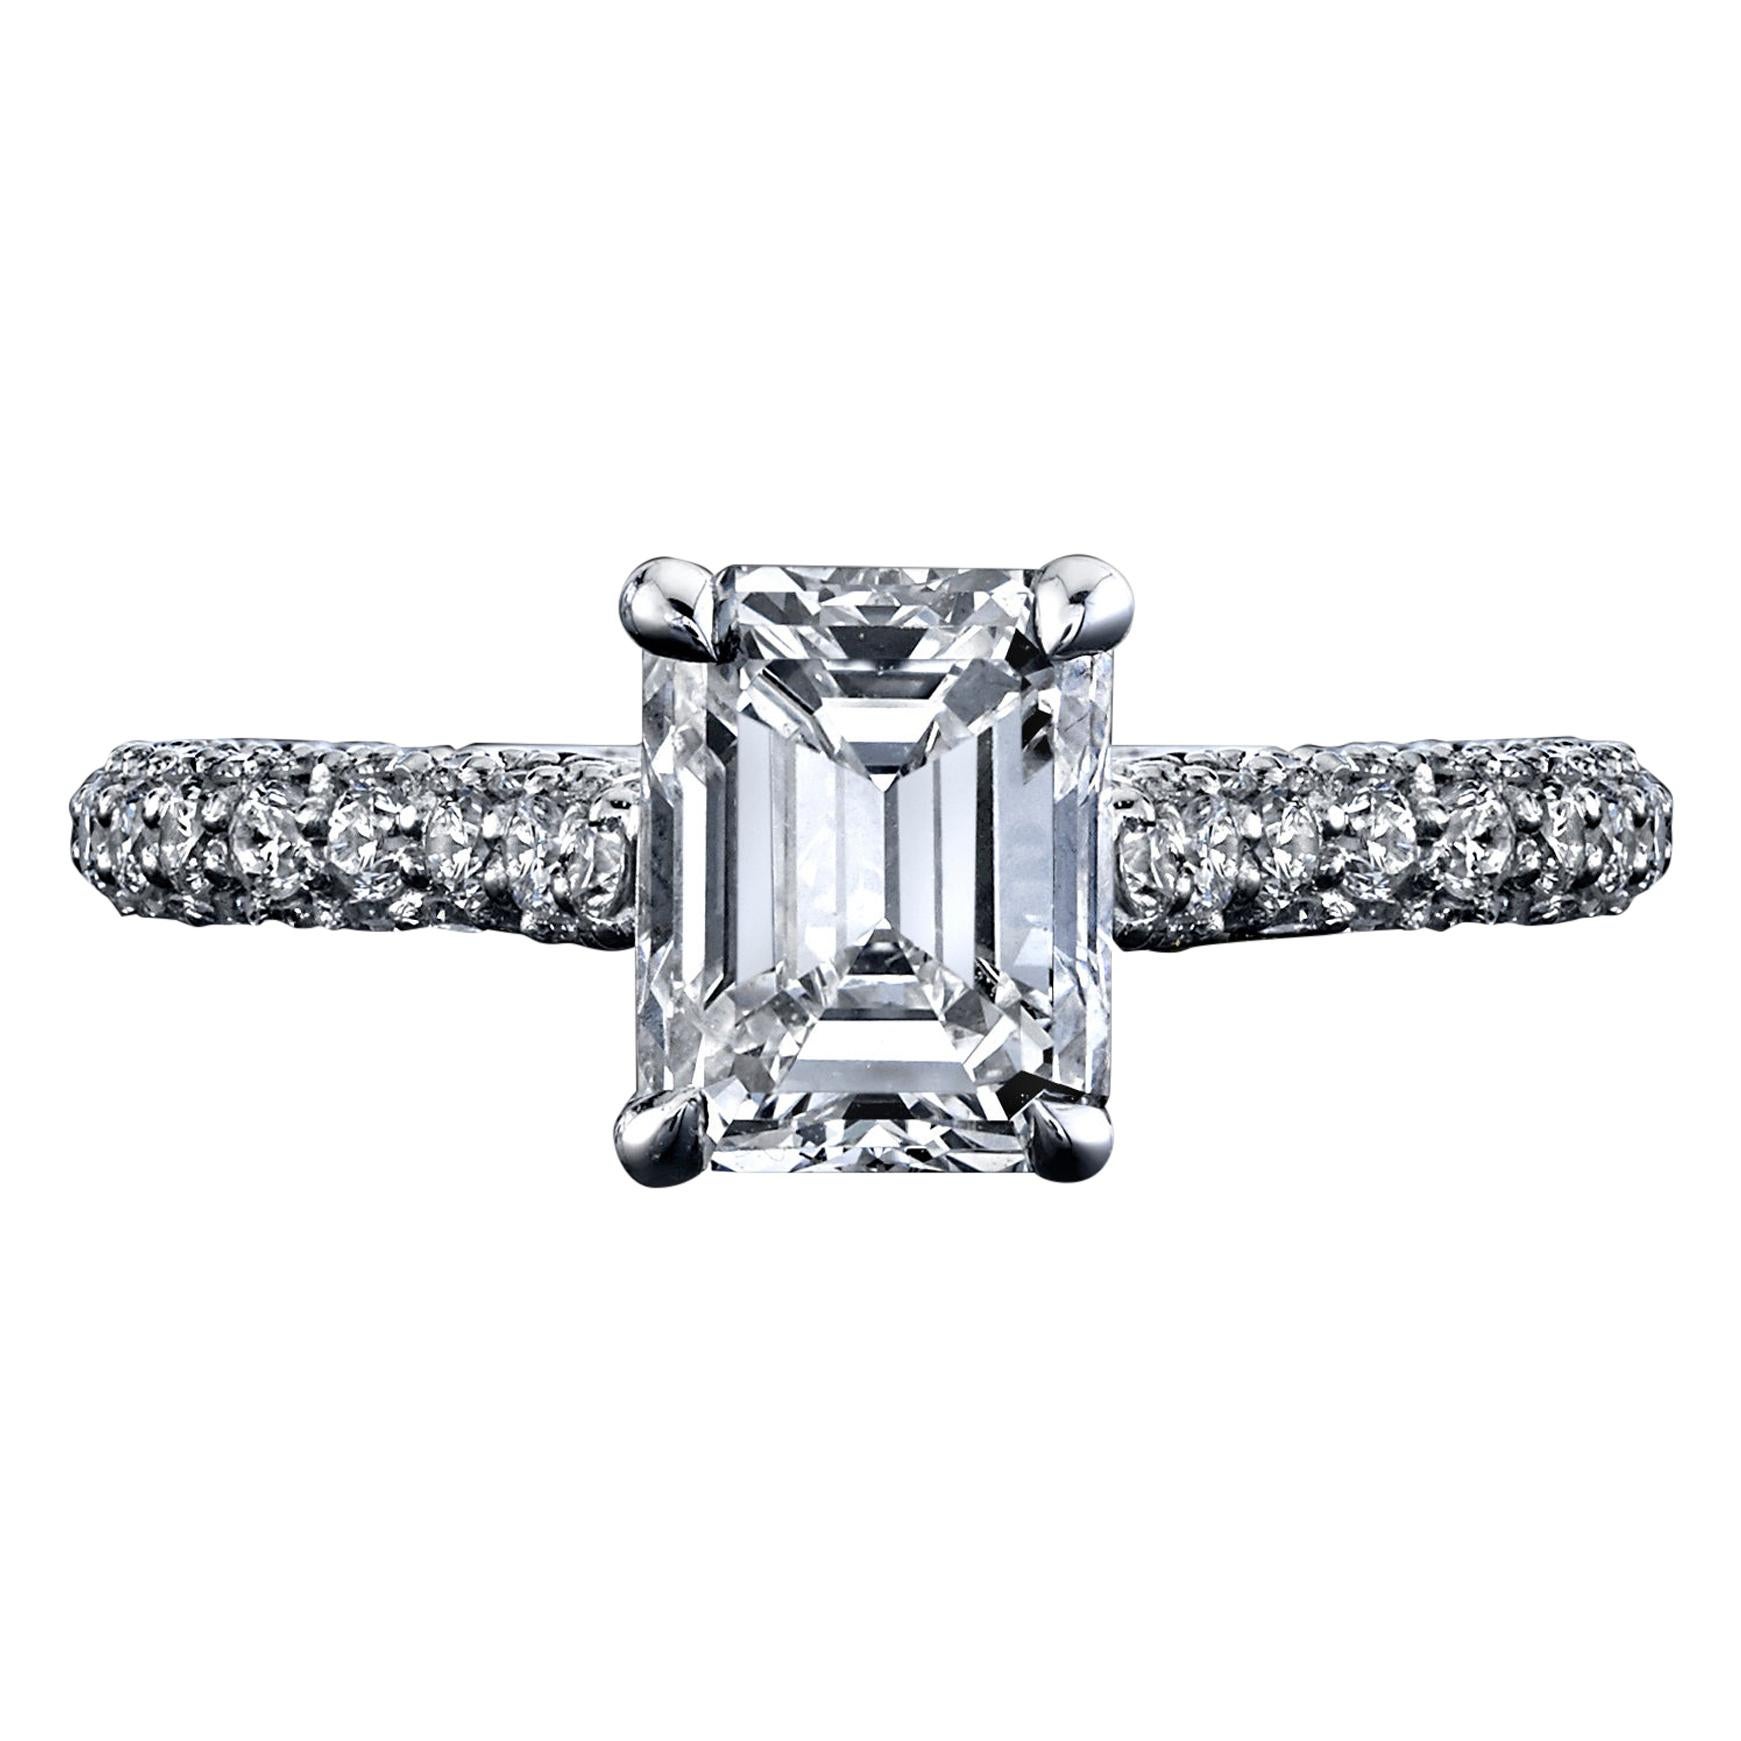 GIA Certified 1.42 Carat Emerald Cut Diamond Ring